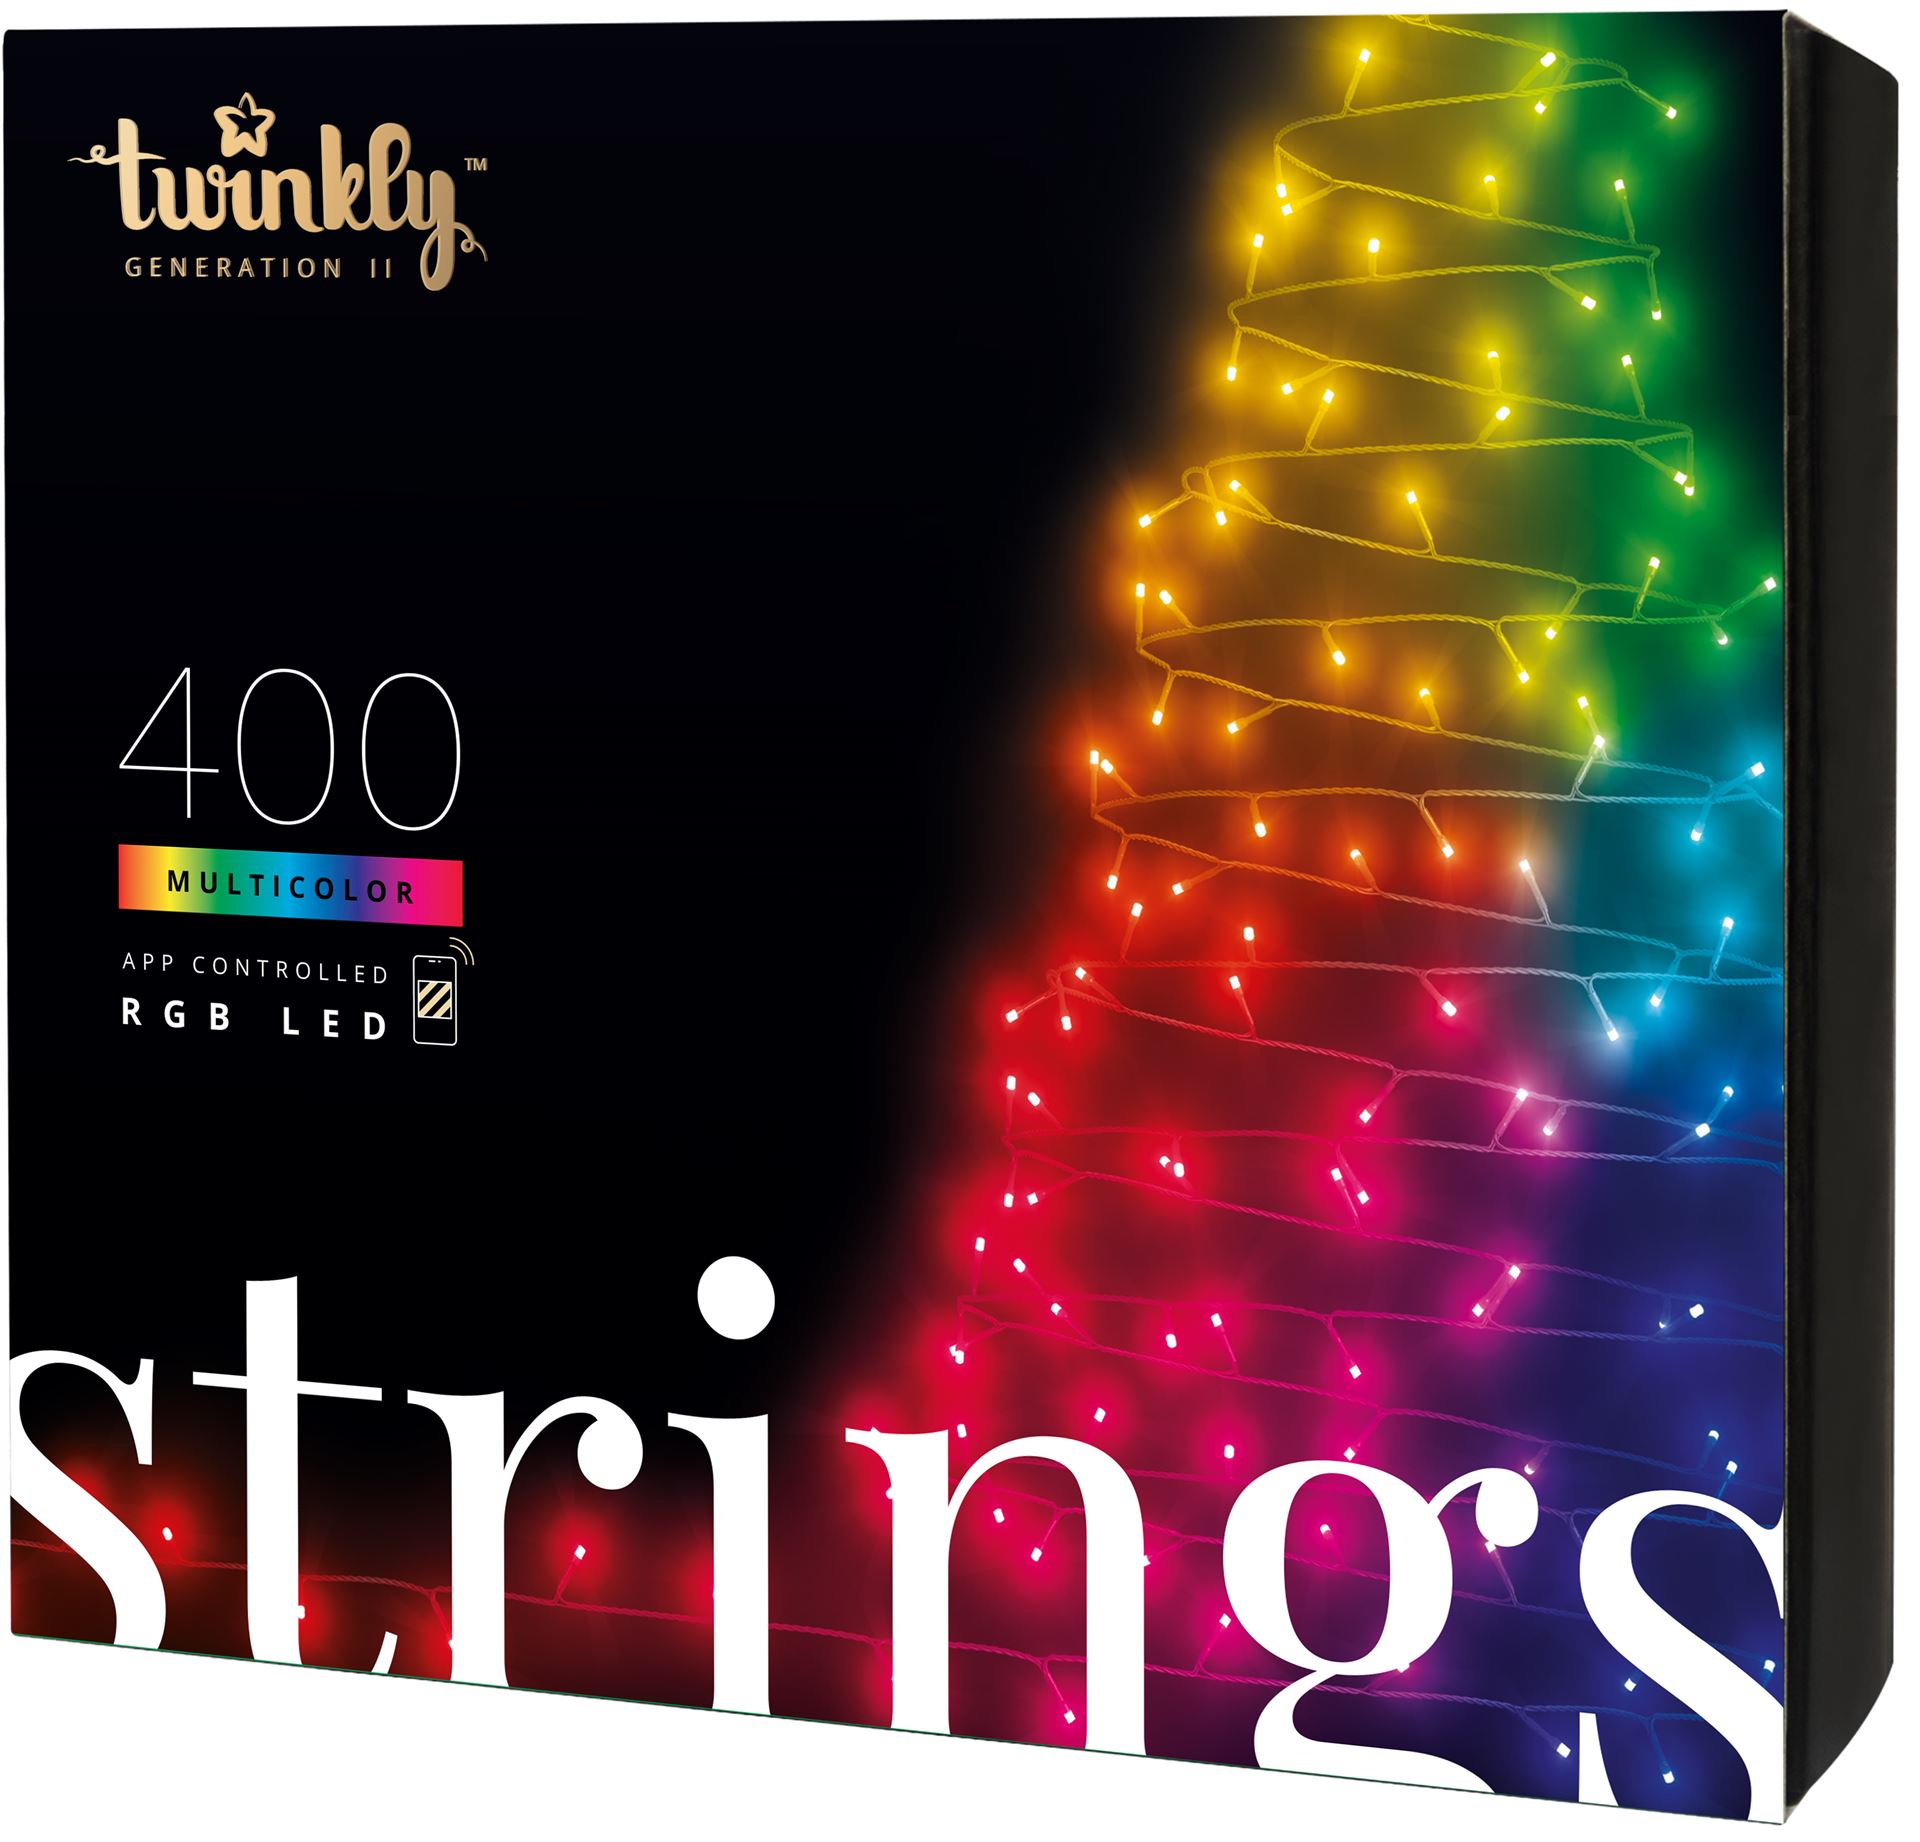 Twinkly - smart kerstboomverlichting - 32 m - 400 gekleurde ledlampjes (RGB) - met mobiele app, timer & dimmer